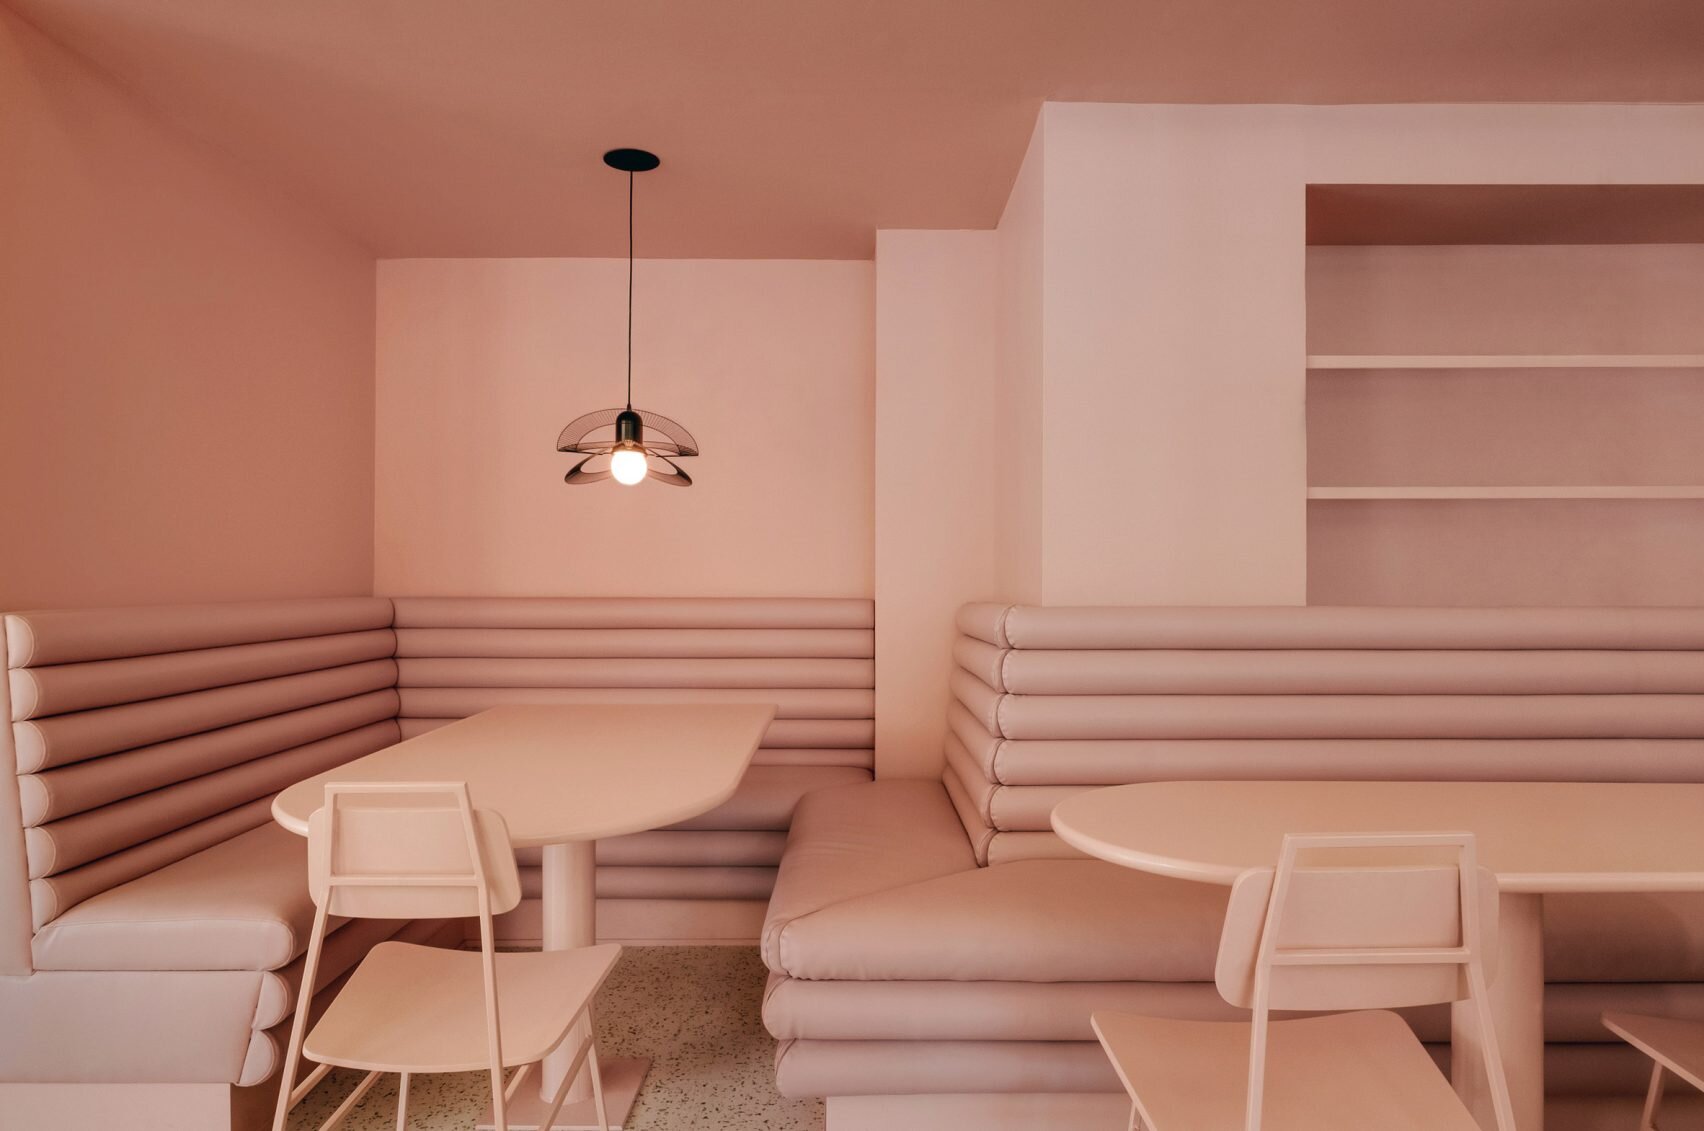 pastel-rita-appareil-architecture-interiors-cafe-montreal-canada_dezeen_2364_col_2-1704x1131.jpg